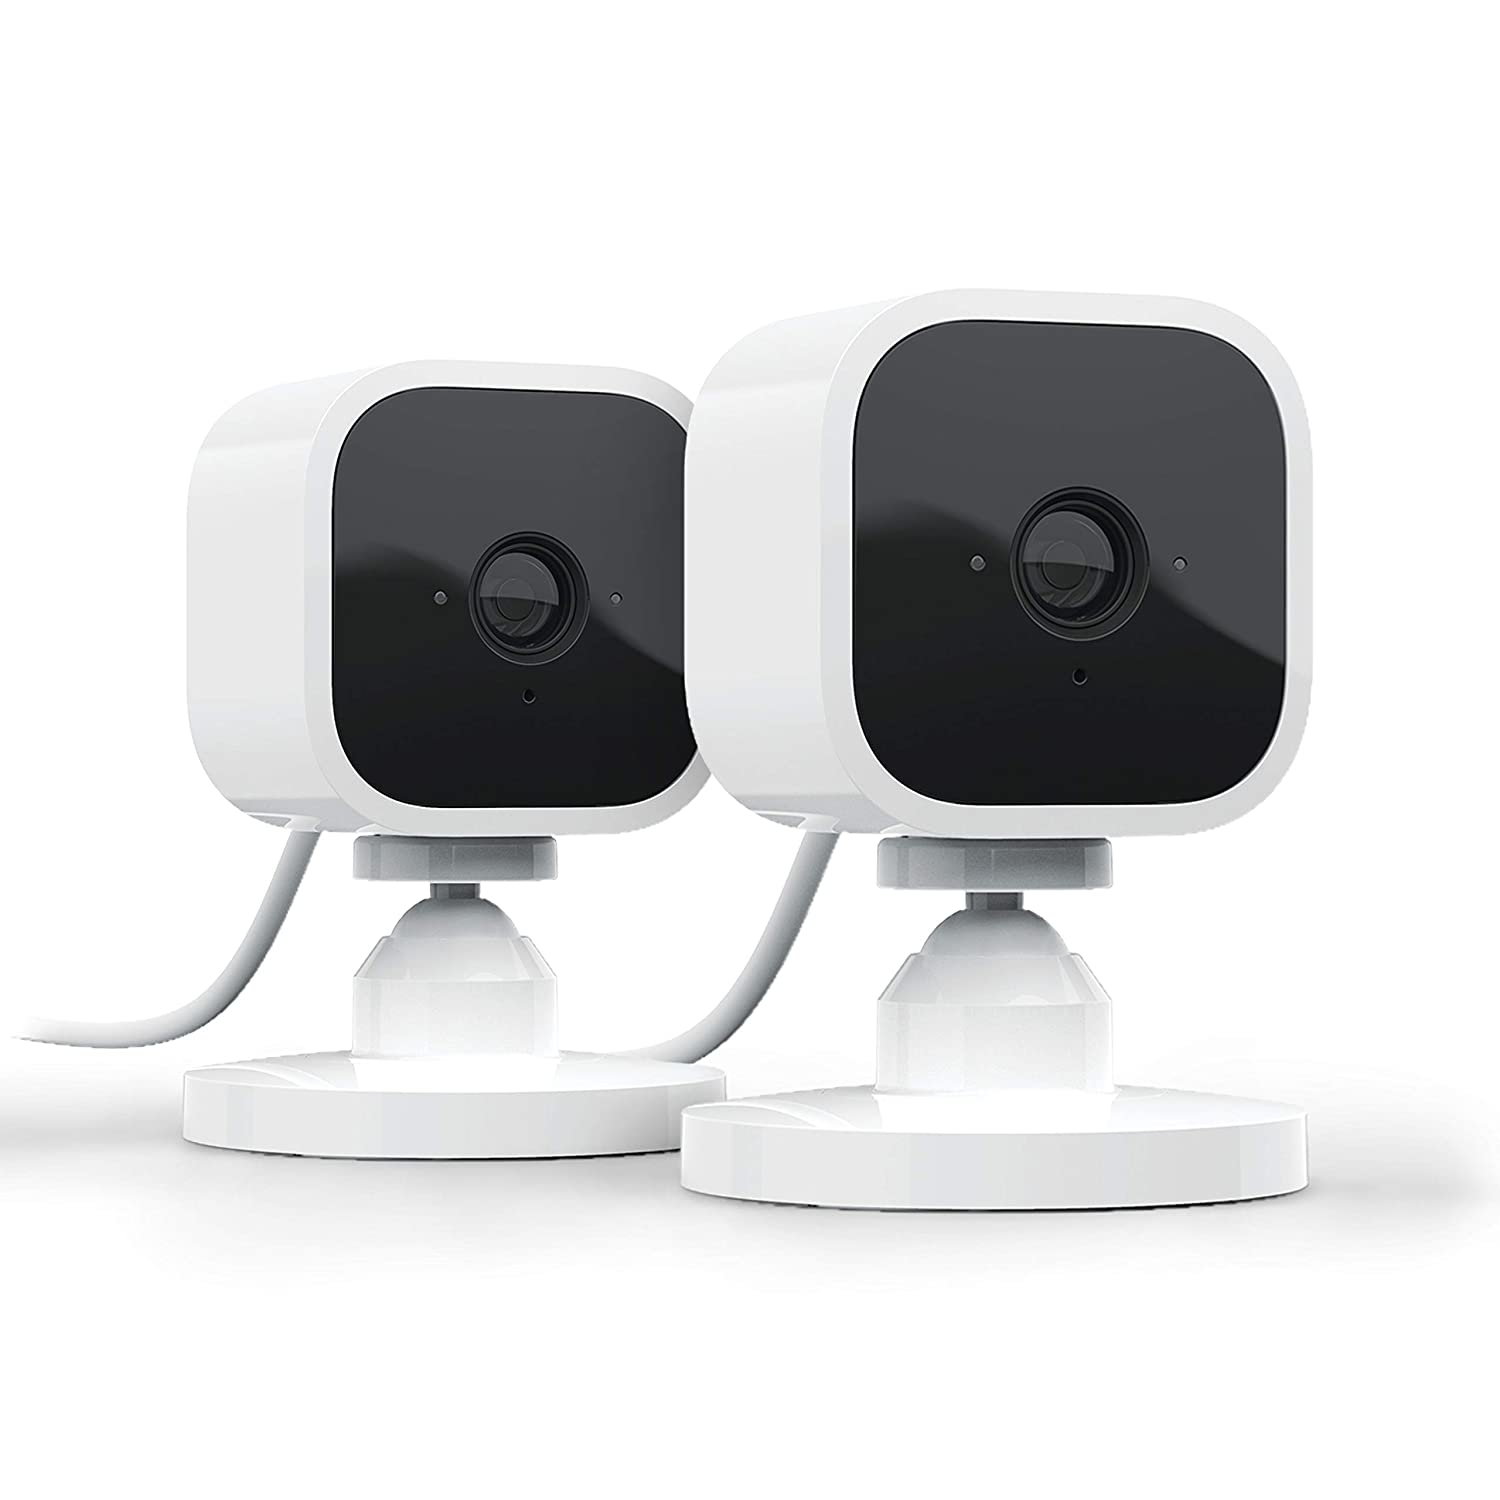 Telecamera di sicurezza Blink Mini | Compact indoor plug-in smart security camera, 1080p HD video, motion detection, Works with Alexa 2 Cameras [B07X7CQBJP?UK]